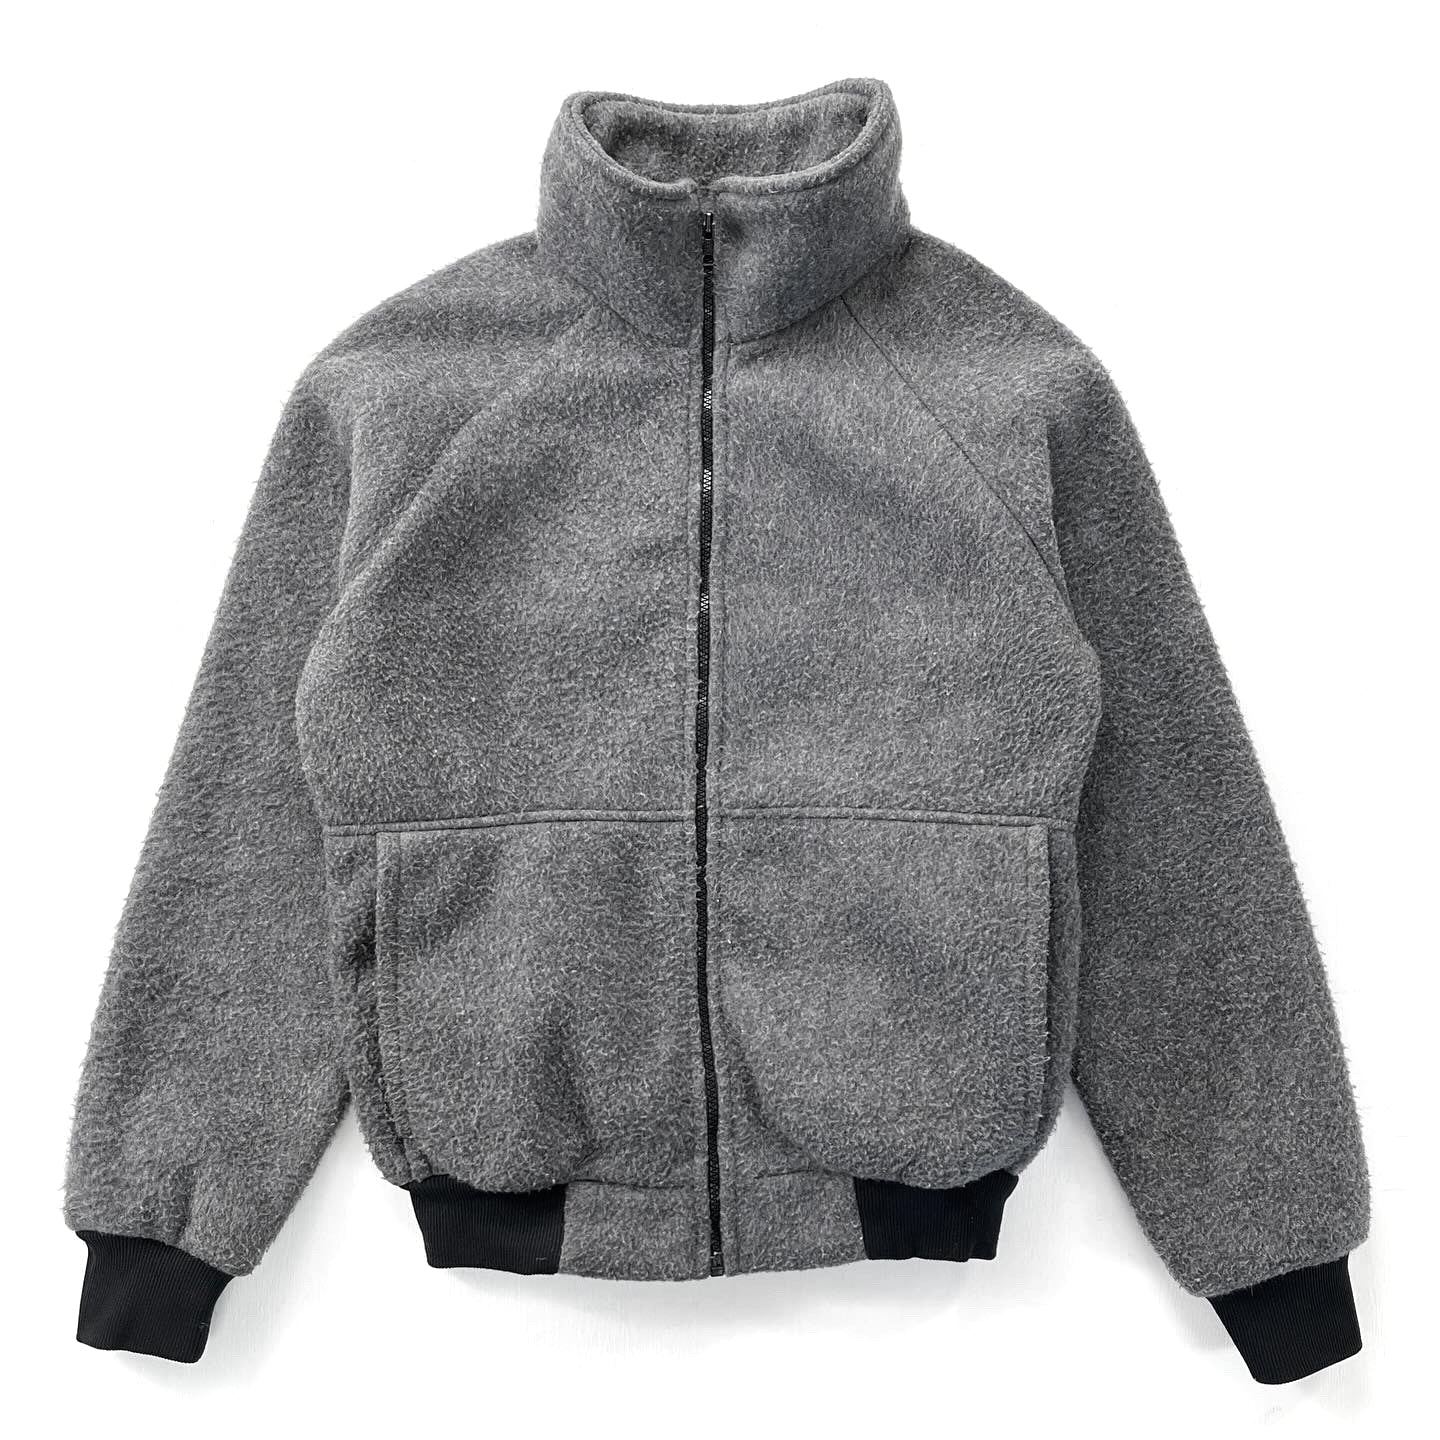 1980s REI Heavyweight Full-Zip Fleece Jacket, Charcoal Grey (M)